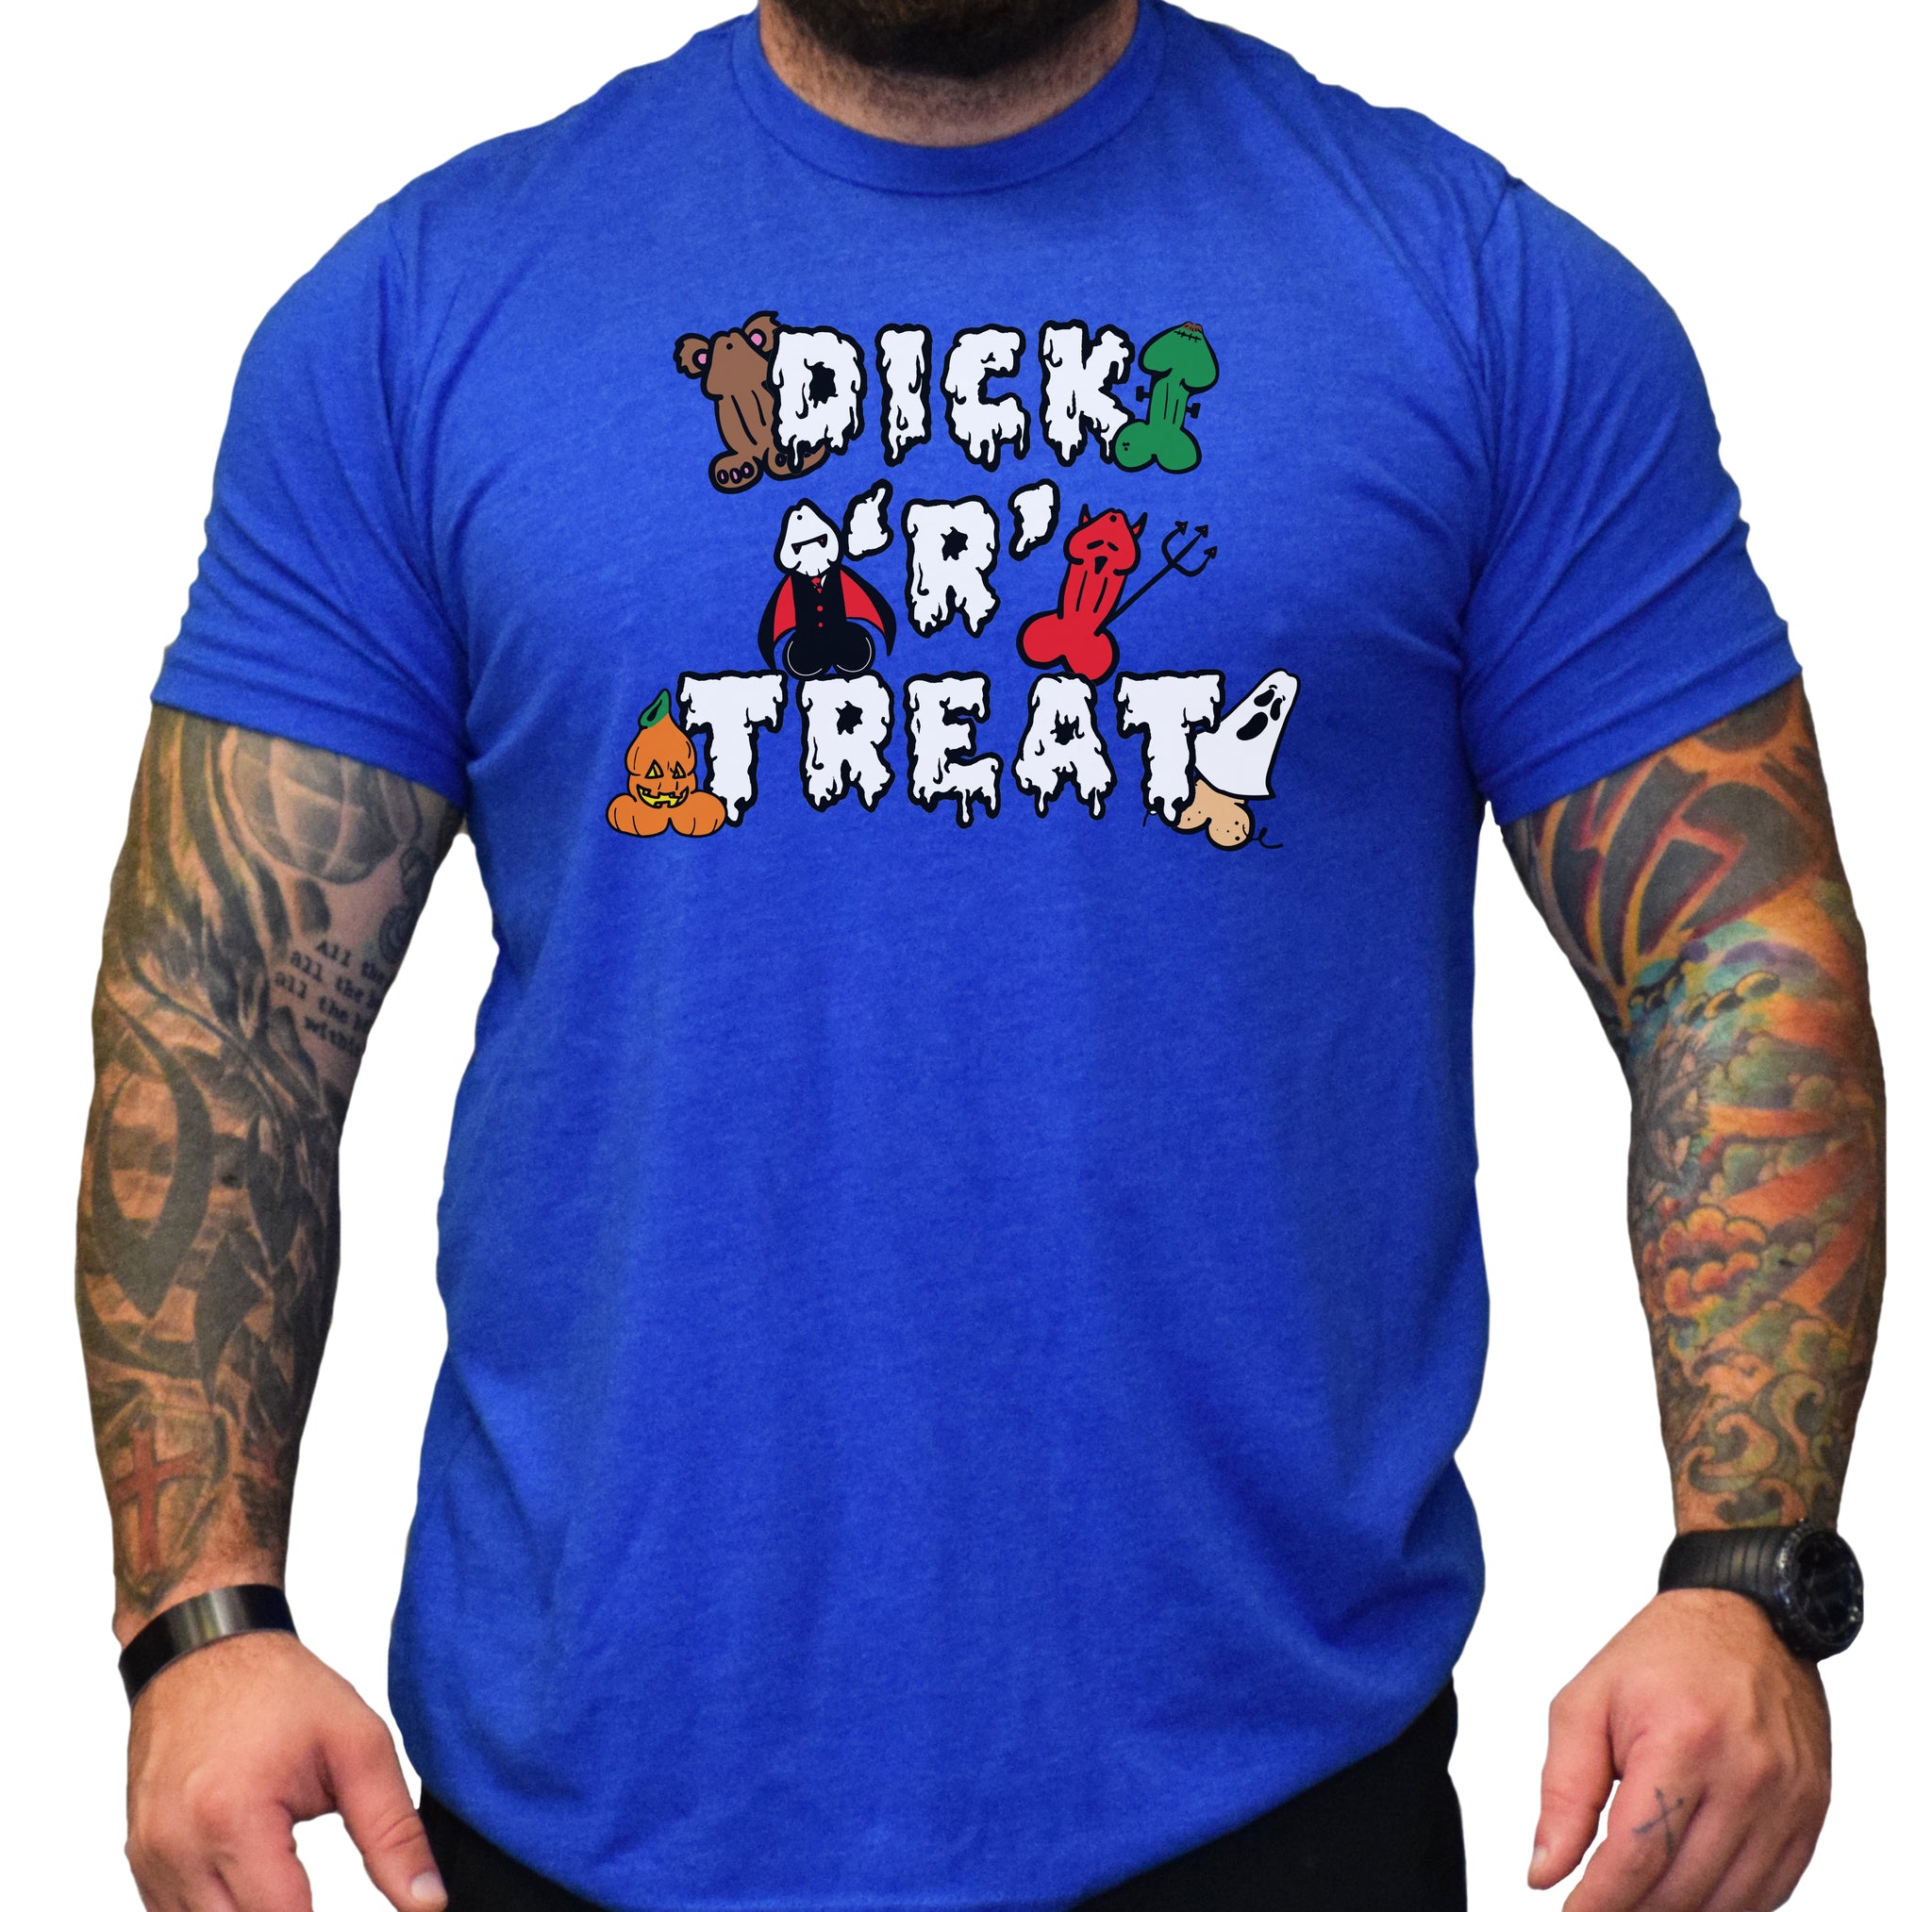 Dick 'R' Treat